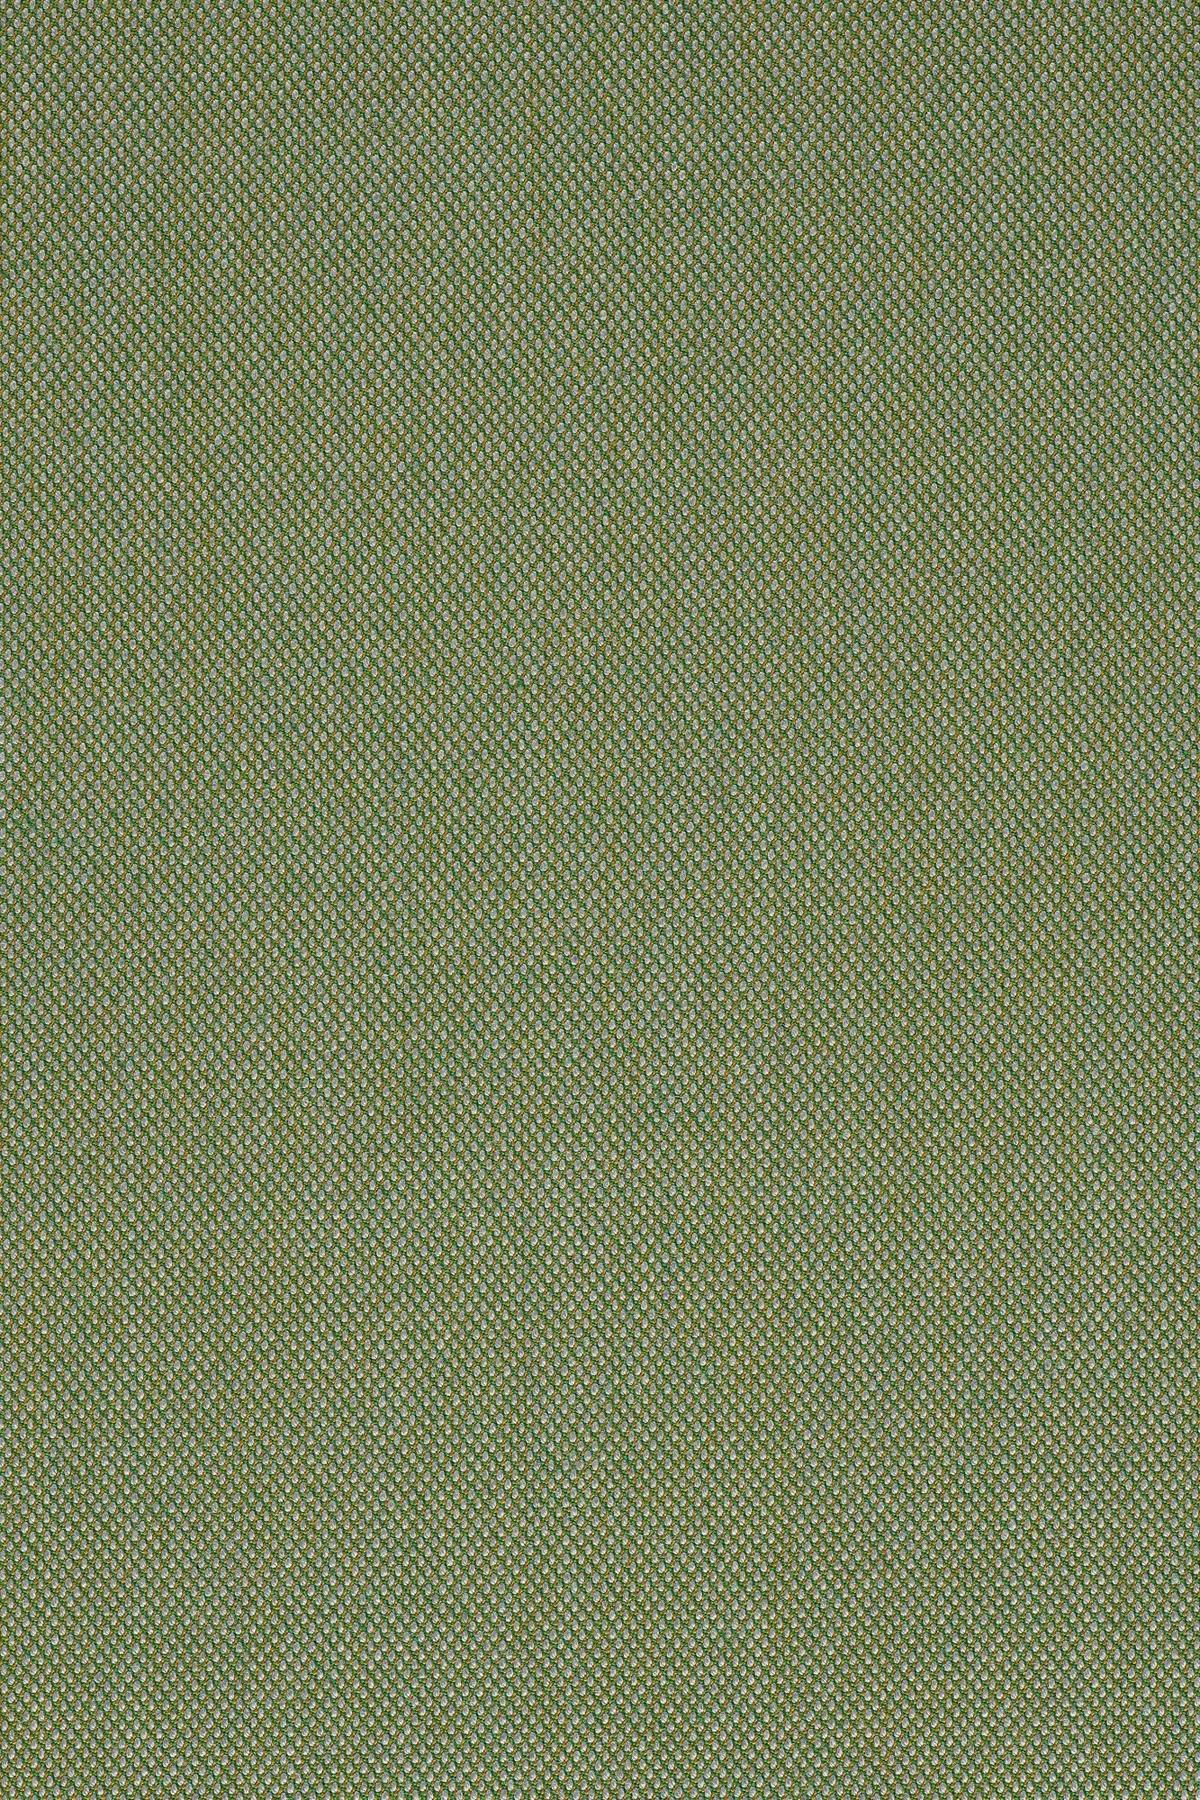 Fabric sample Steelcut Trio 3 946 green